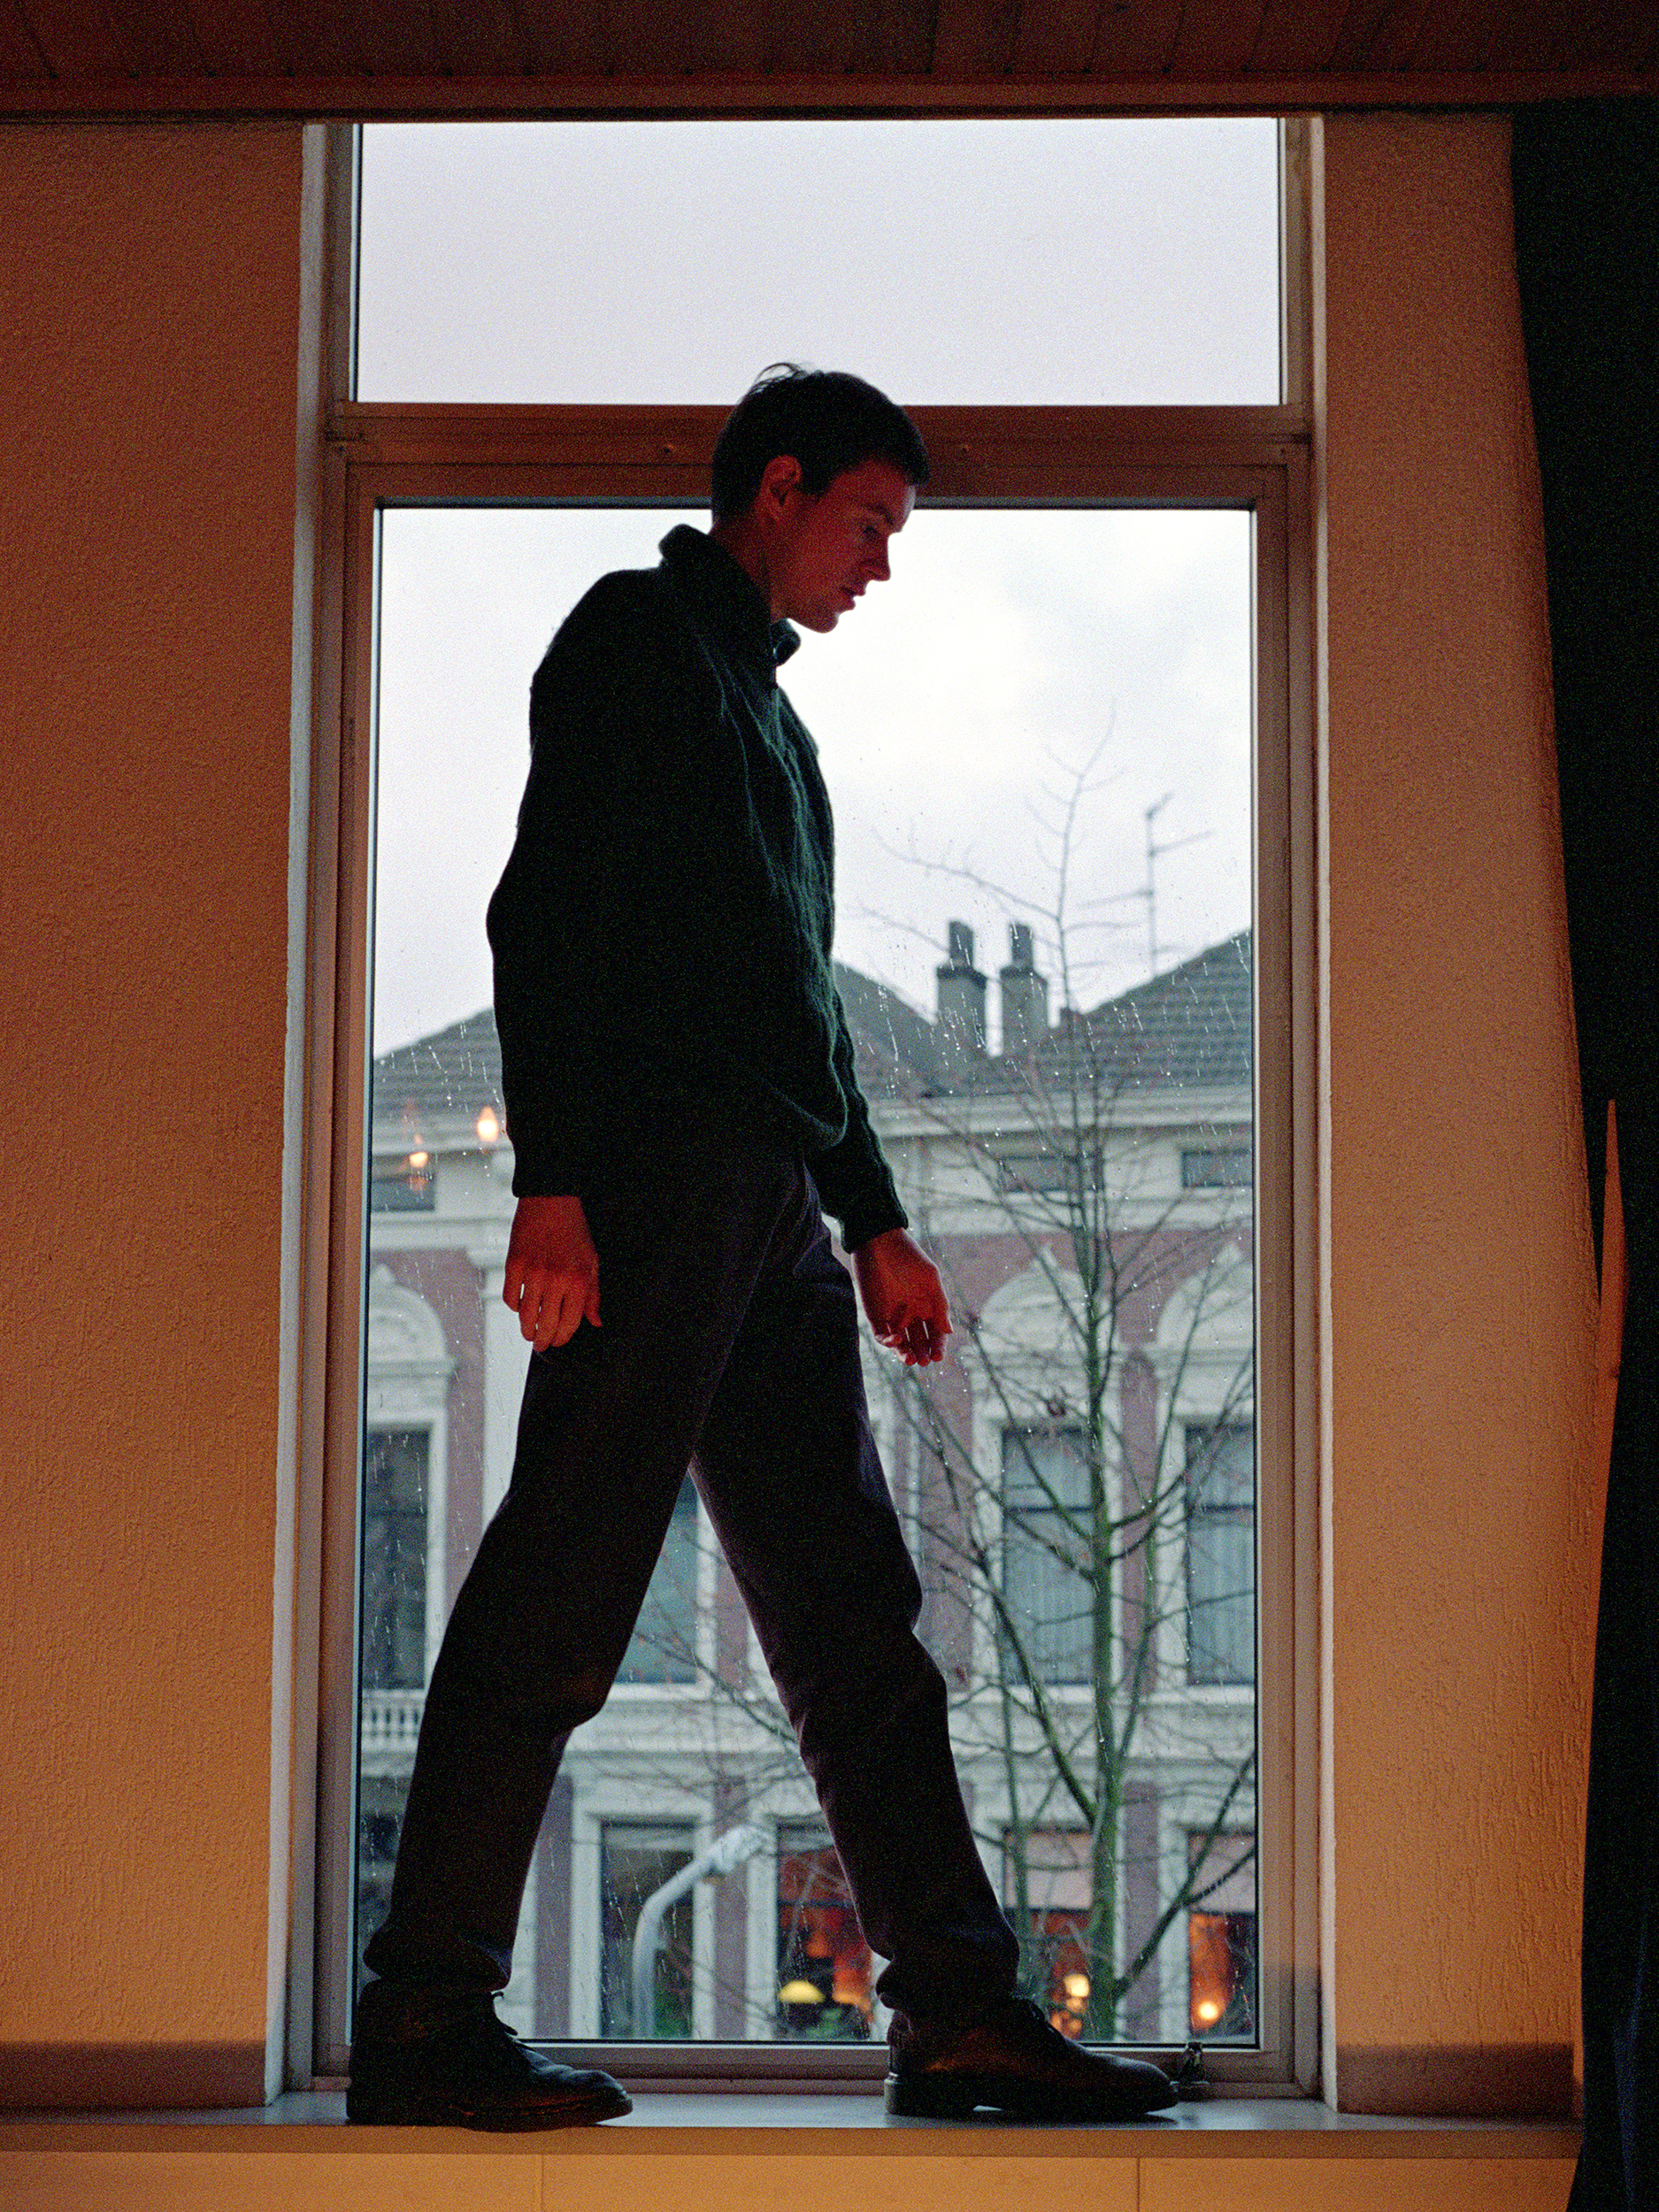 Self-portrait on Windowsill, photograph by Wouter van Riessen